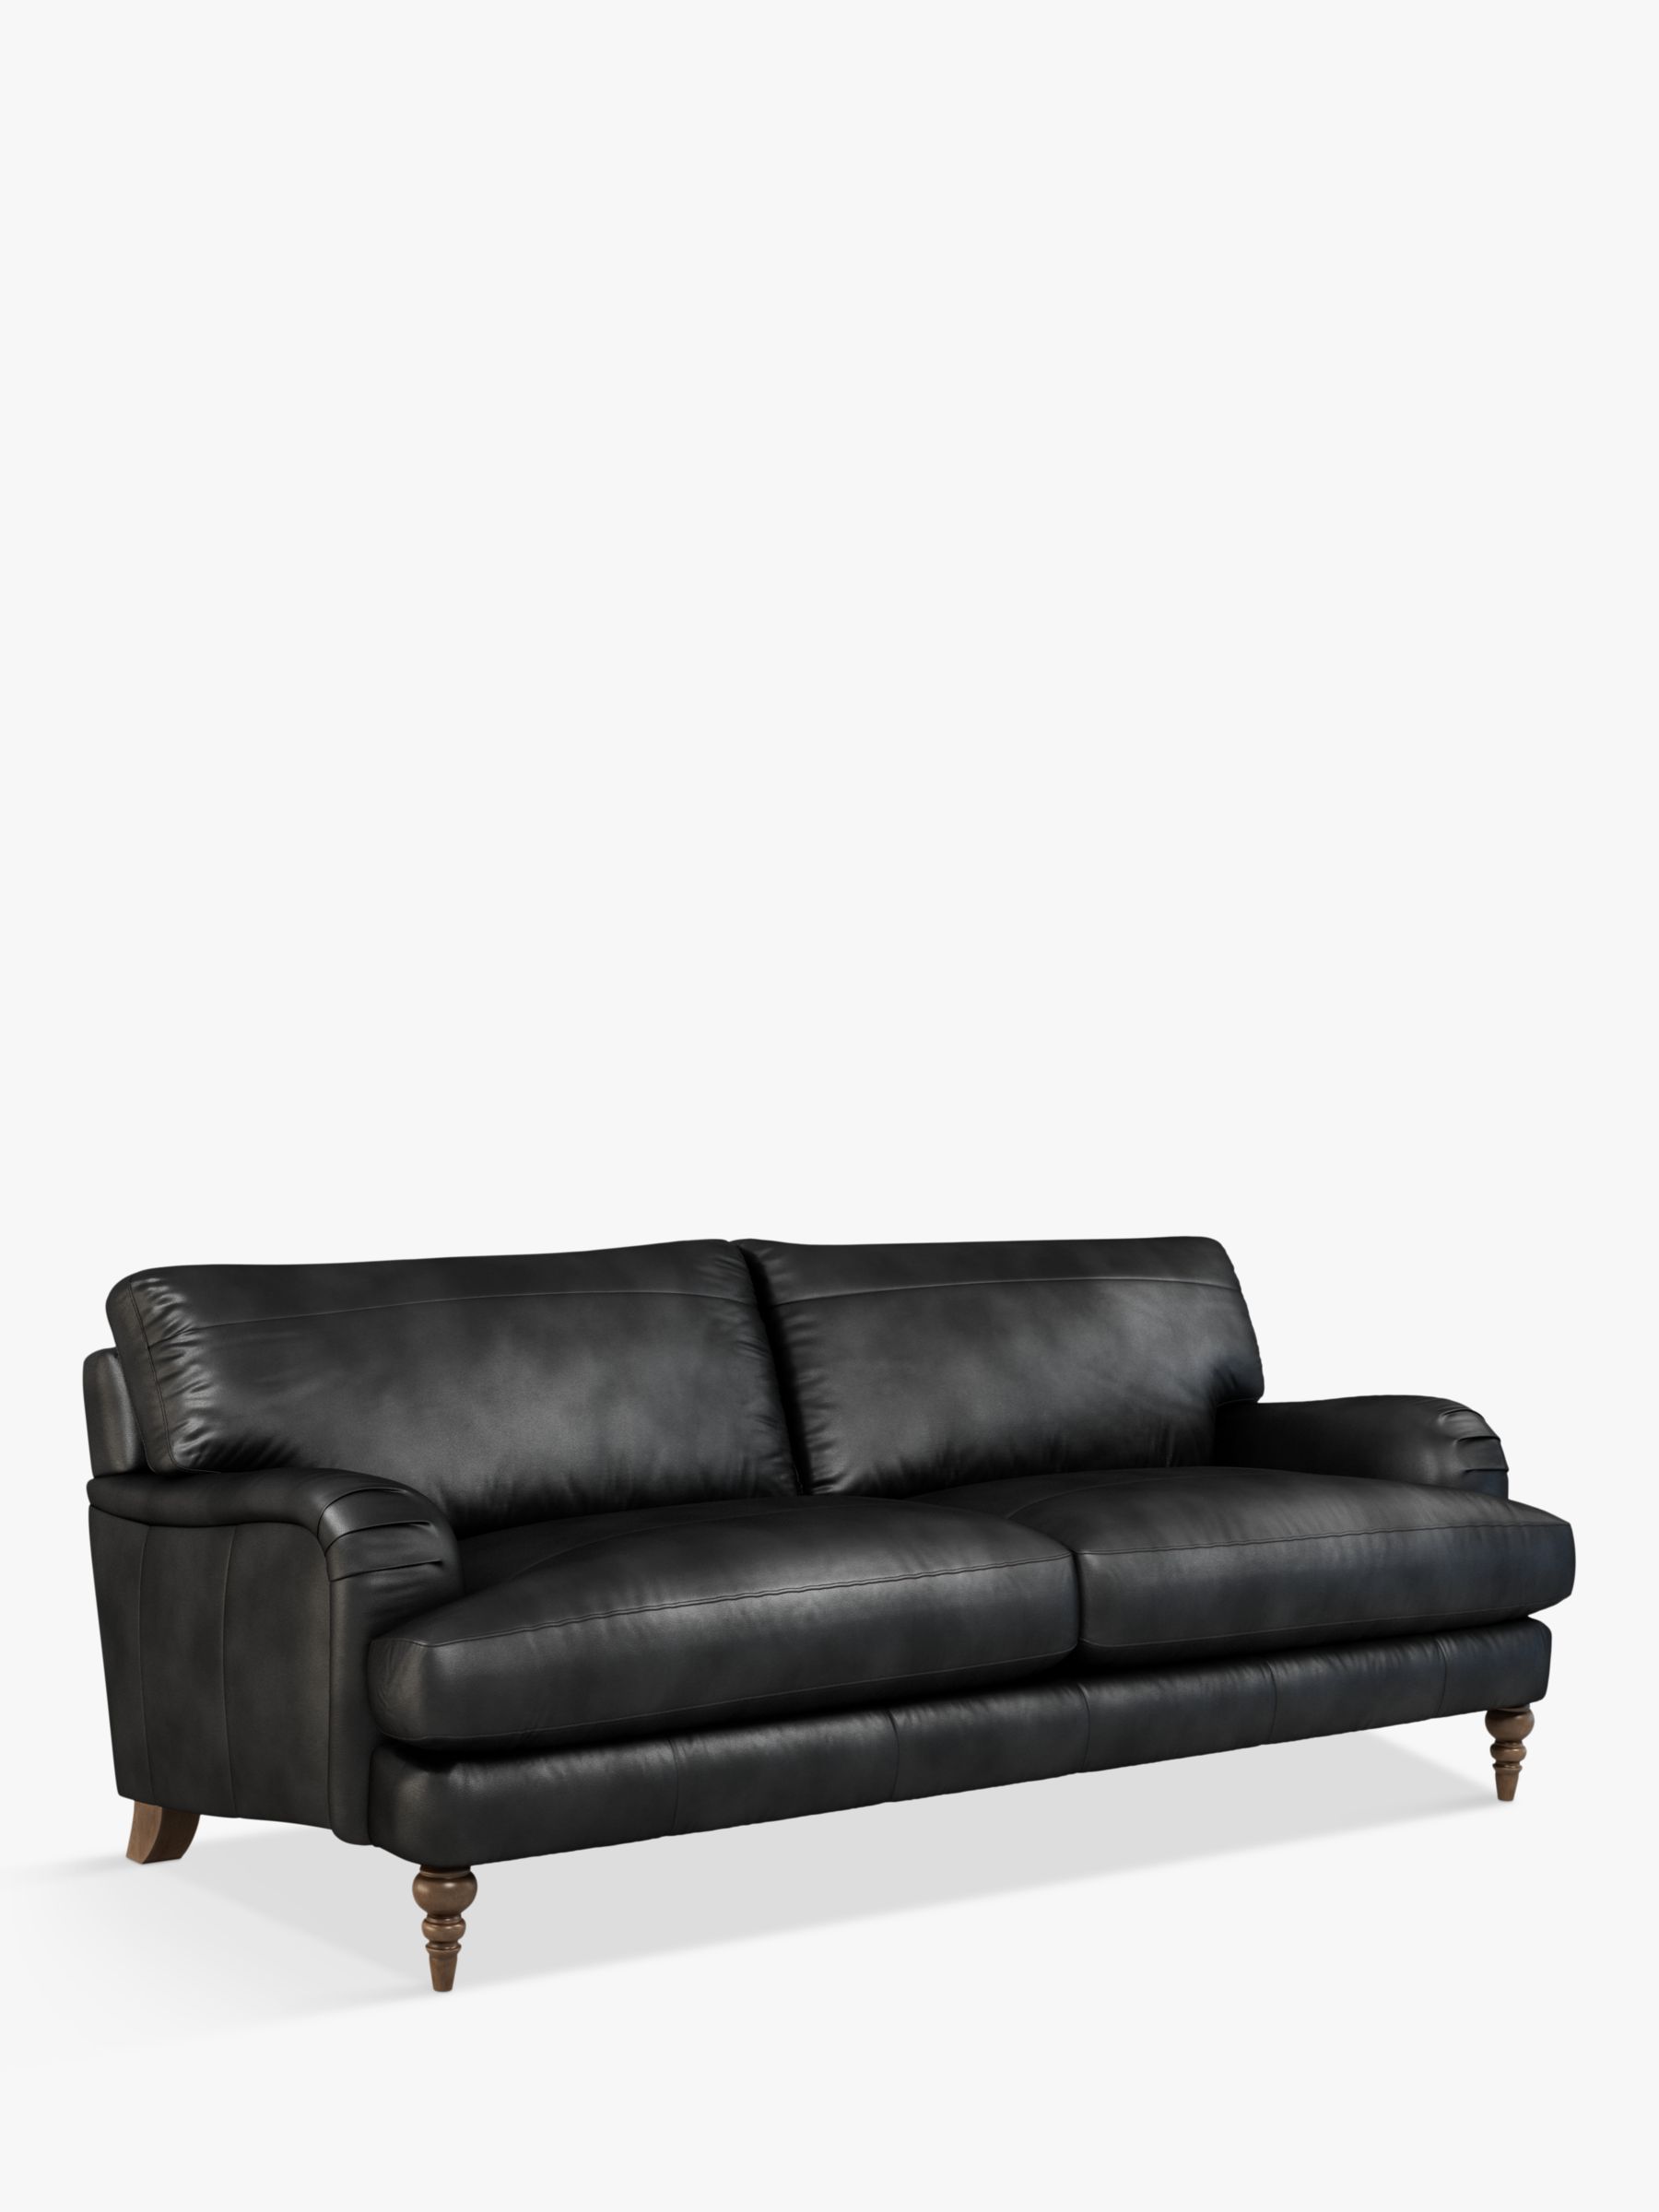 4 Seater Leather Sofa Dark Leg, 4 Seater Leather Sofa